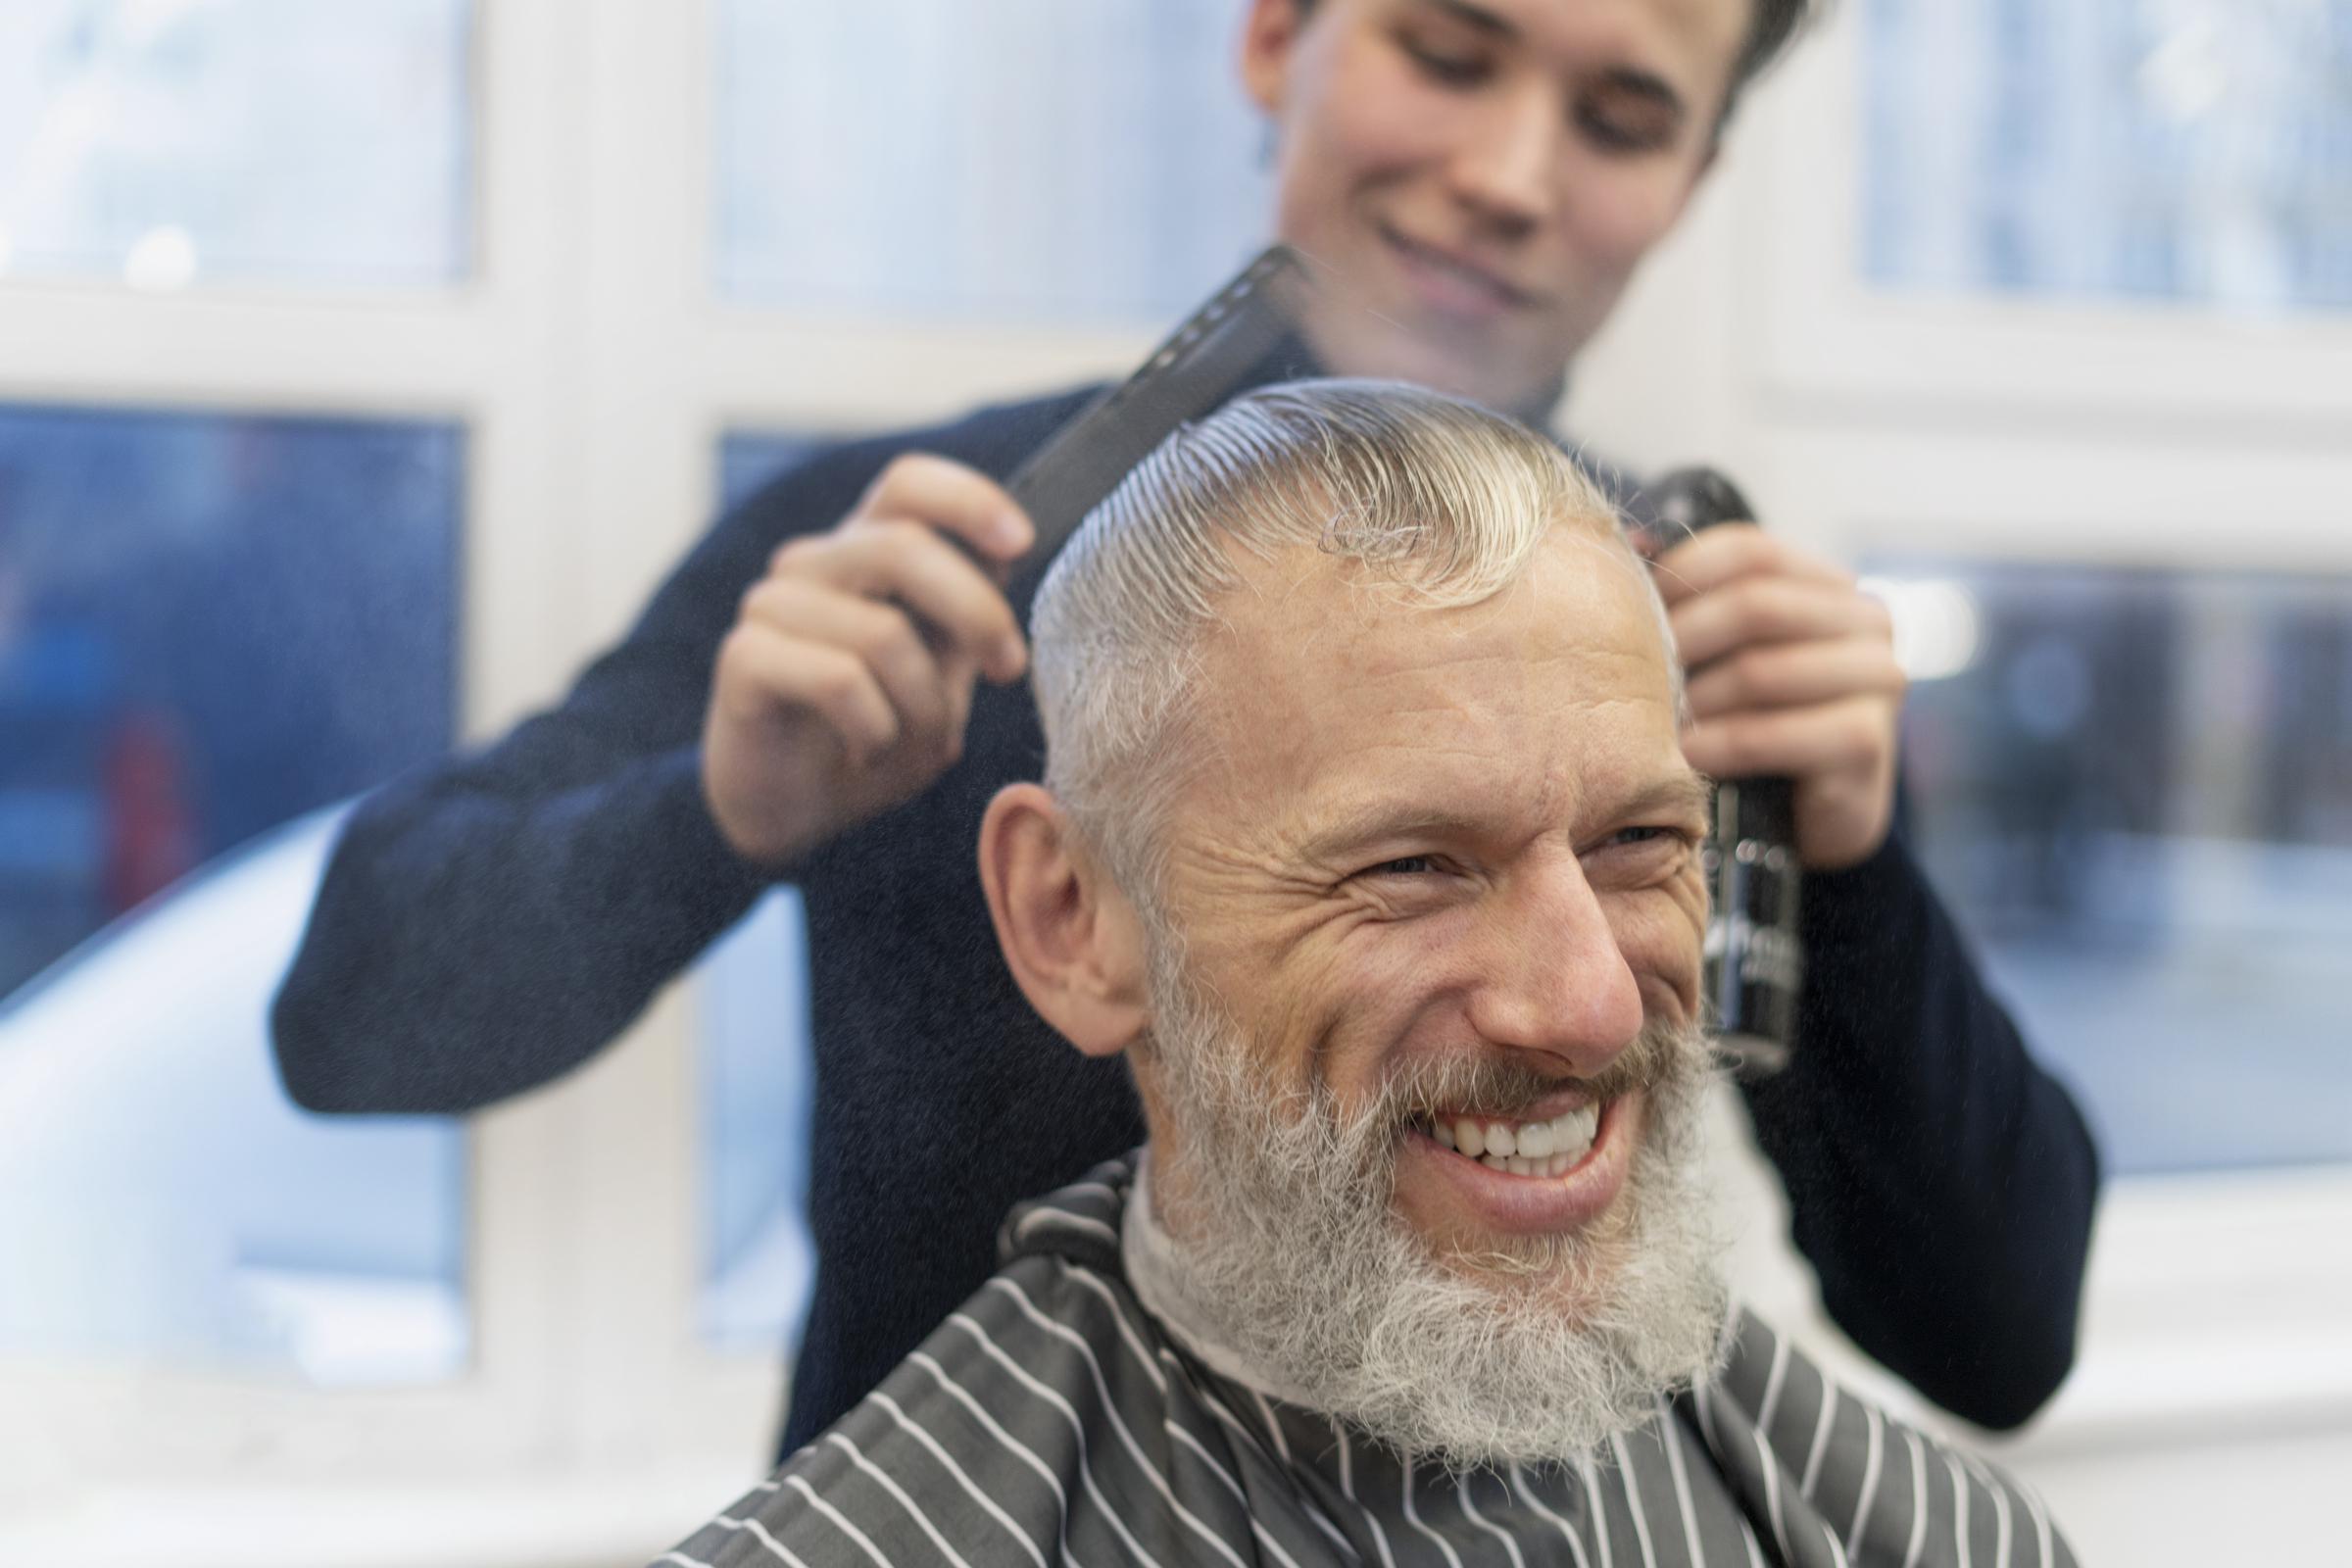 A smiley man at a hair salon | Source: Freepik